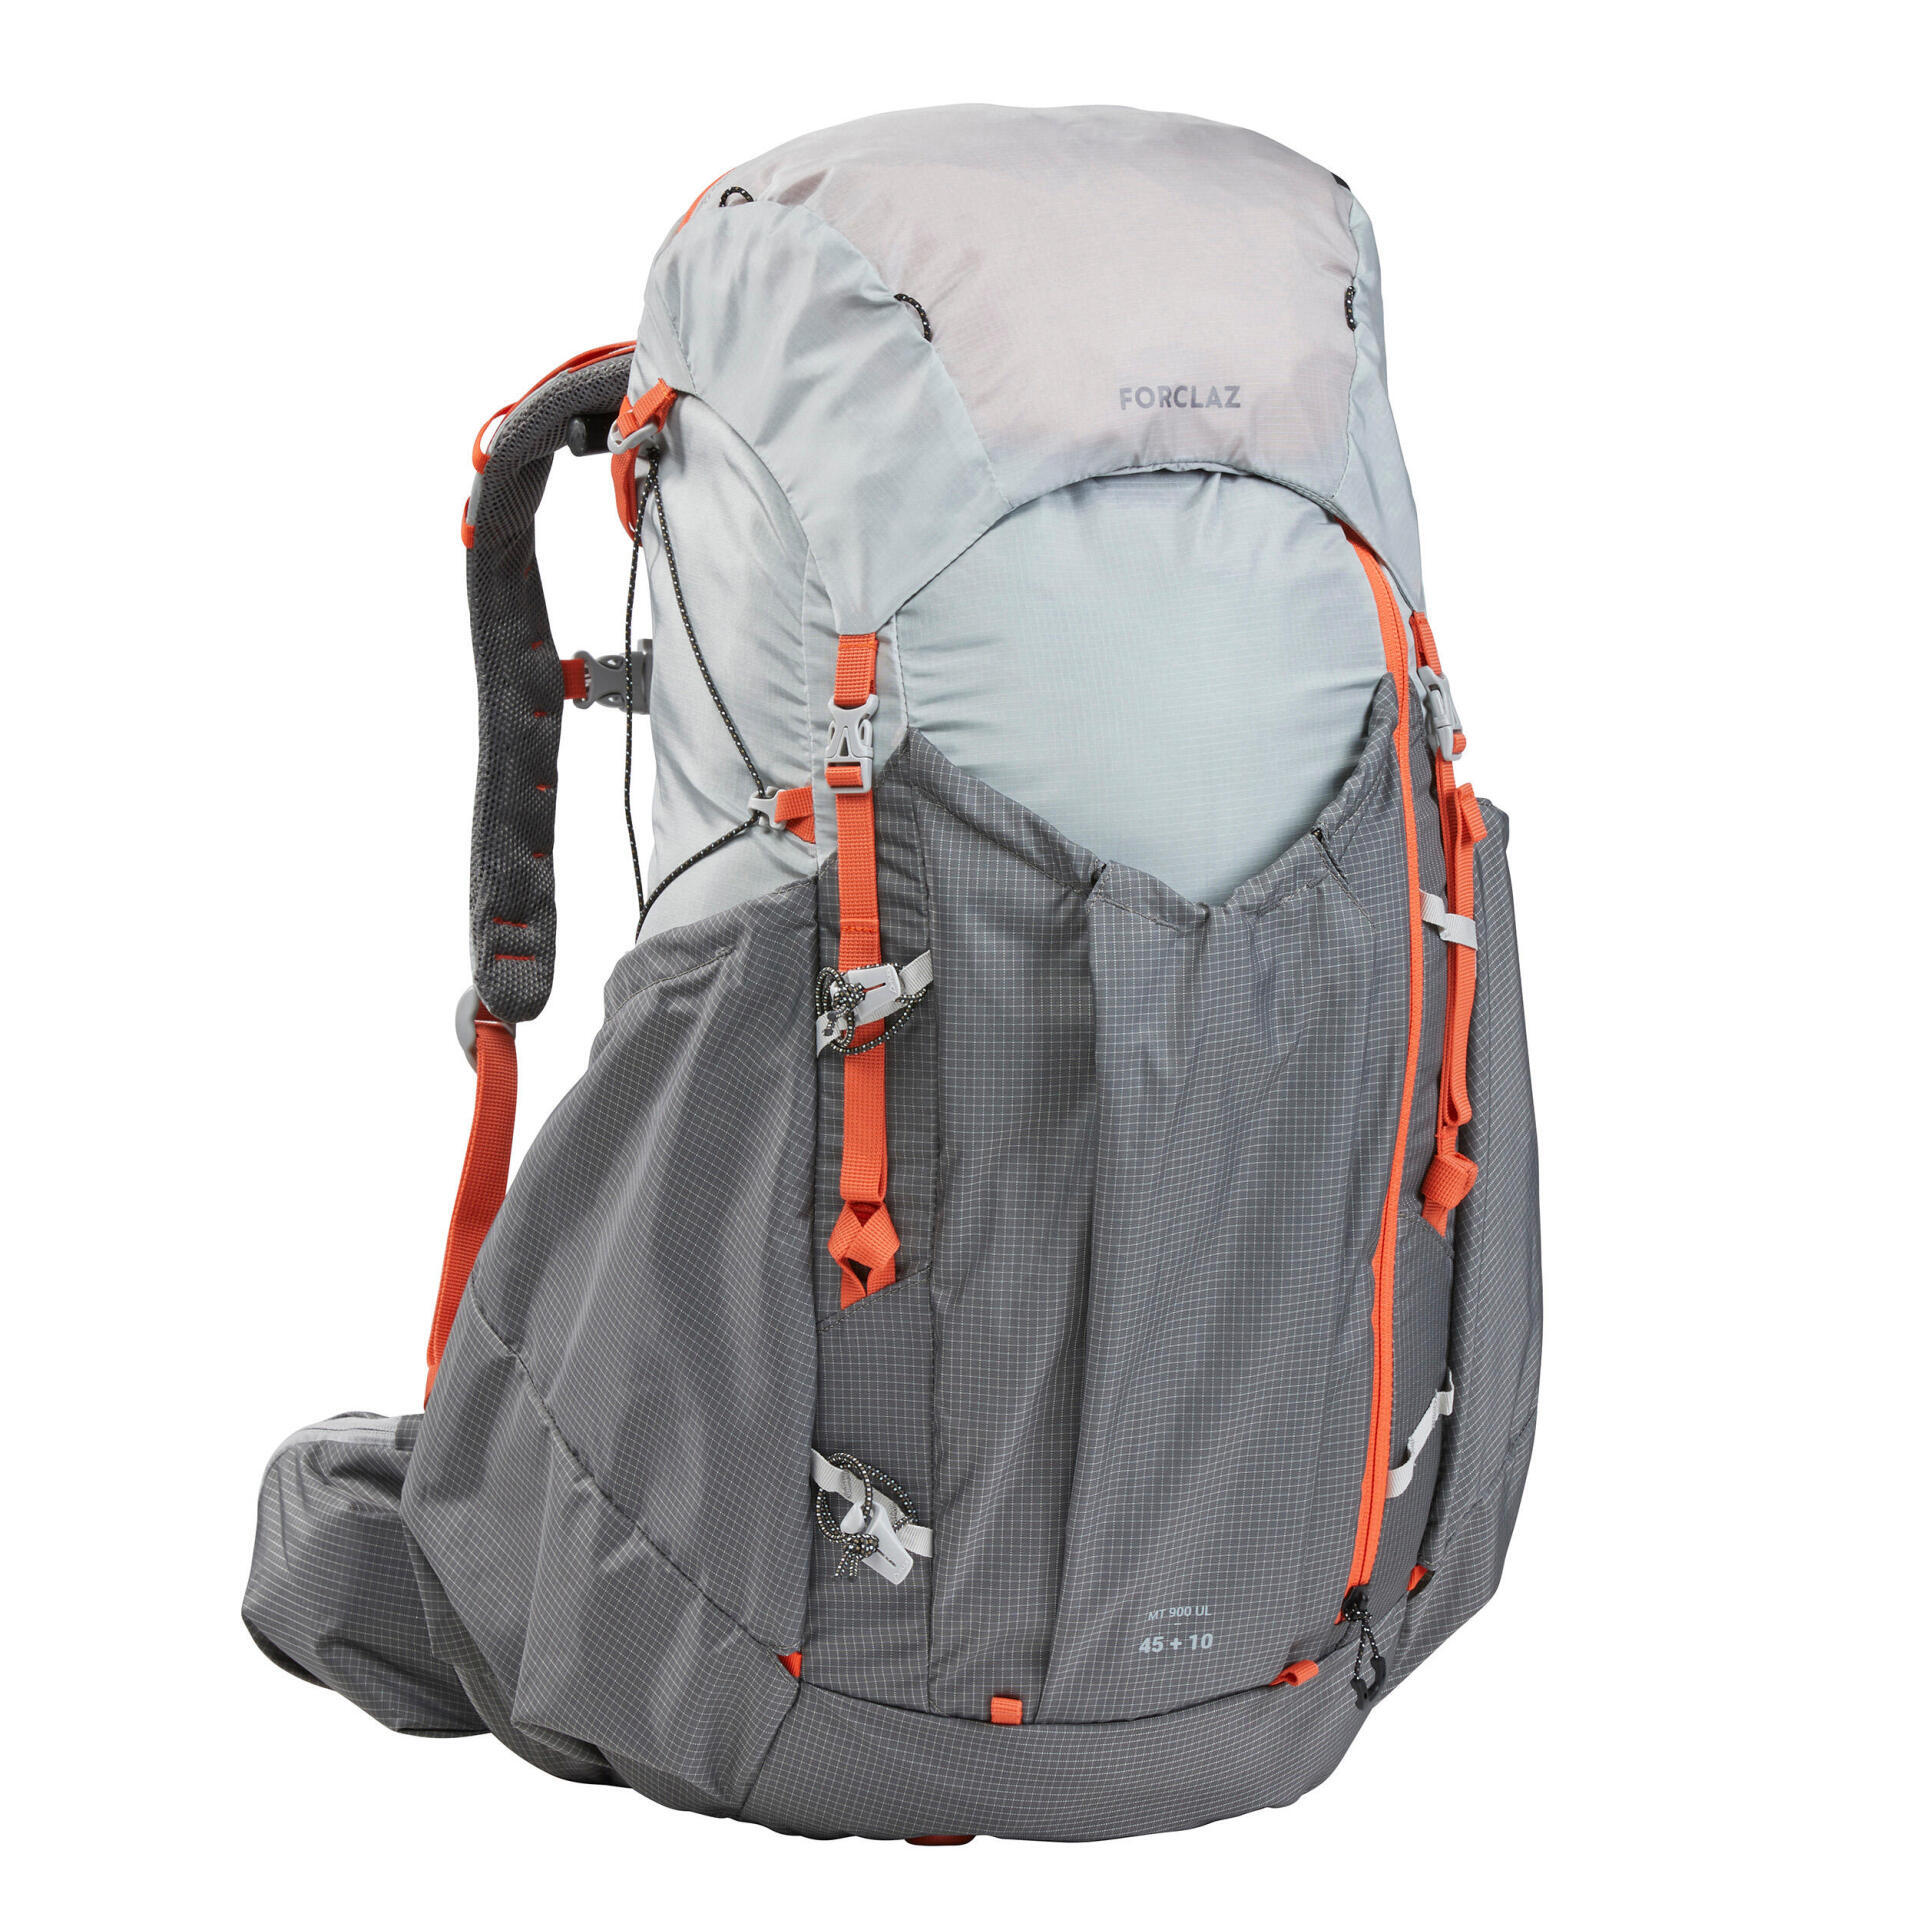 Buy Extreme Machine 90L Navy Red Detachabe 2 in 1 Rucksack Bag Trekking Bag  Hiking Backpack at Amazon.in